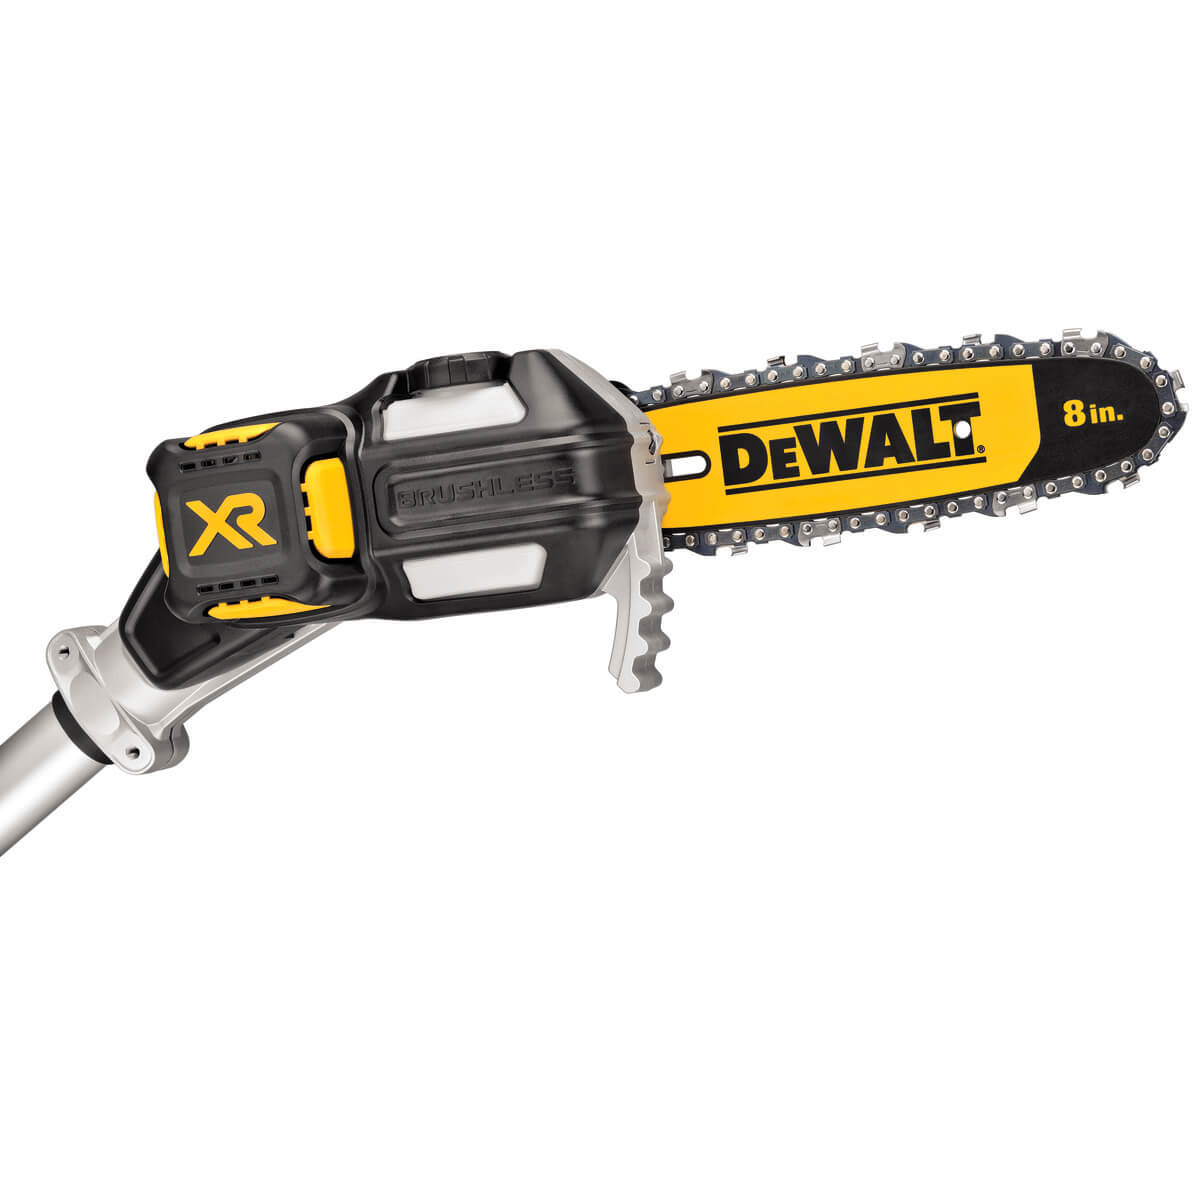 Dewalt DCPS620M1 - 20V MAX* Pole Saw - 4.0AH Kit - wise-line-tools